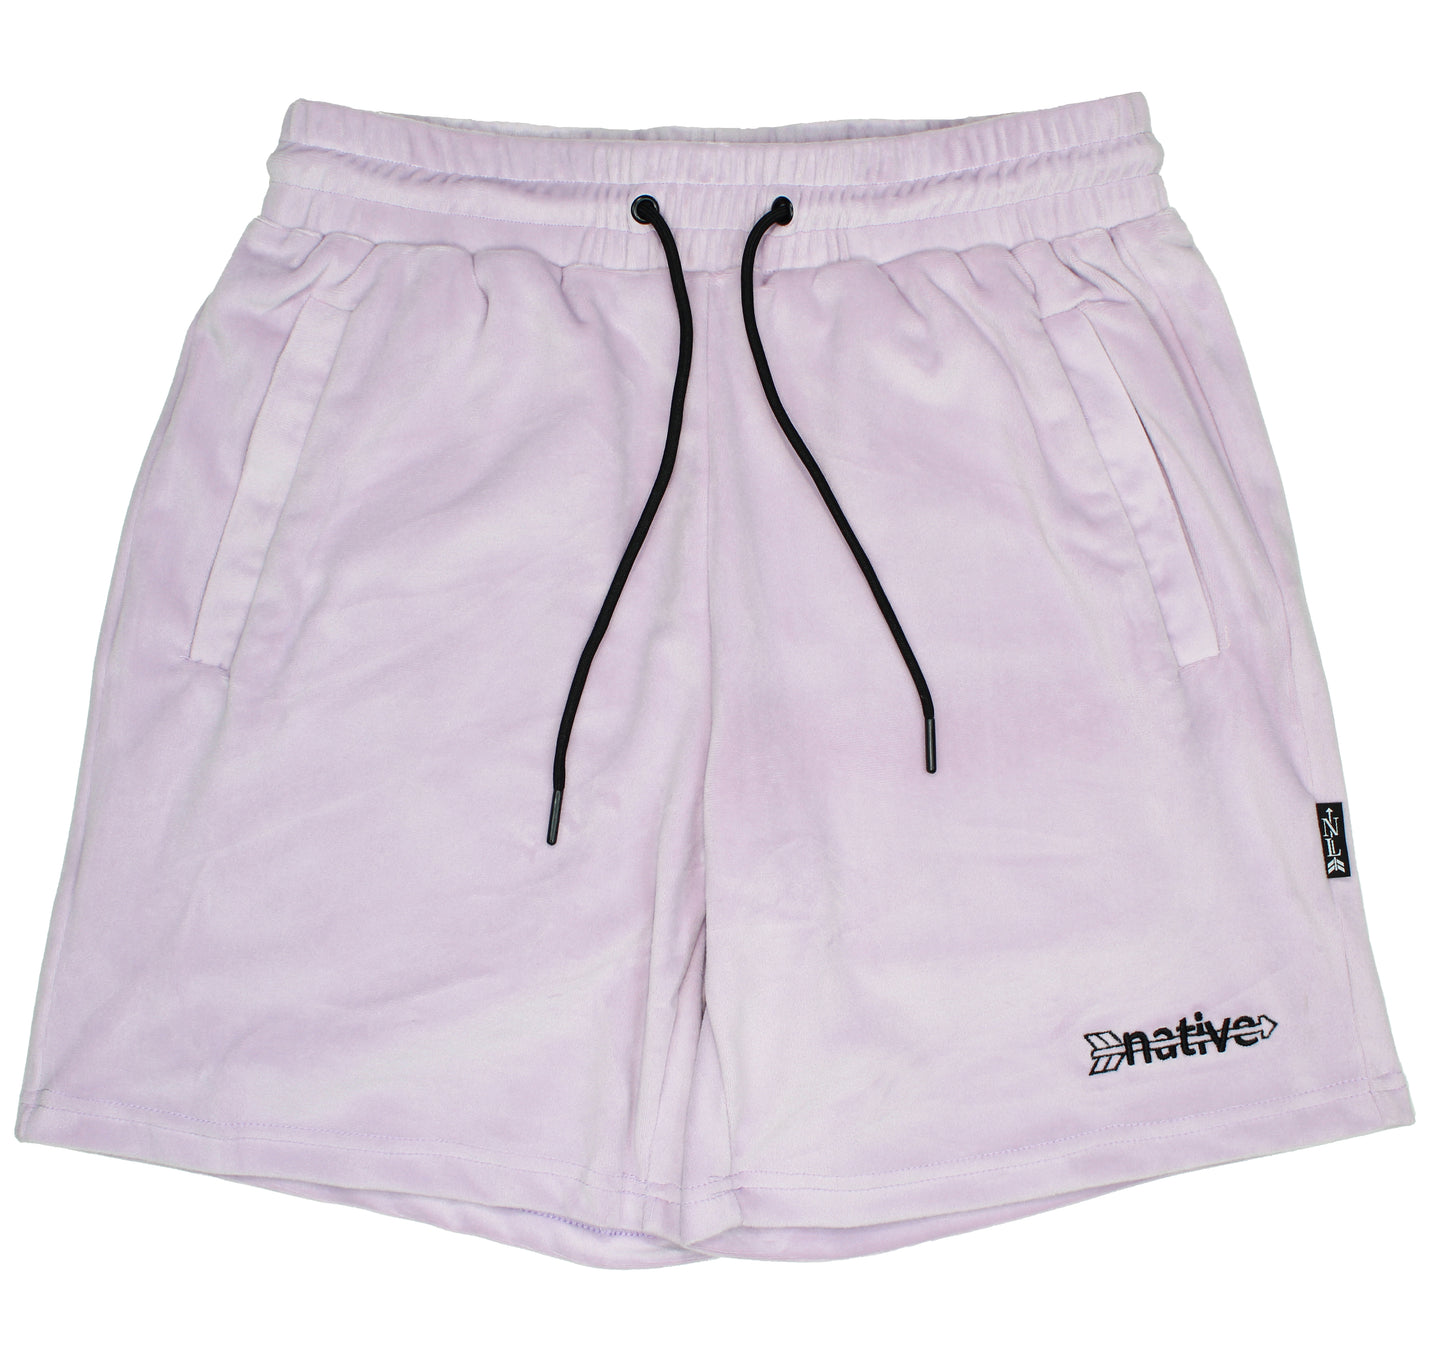 velour shorts in lavender